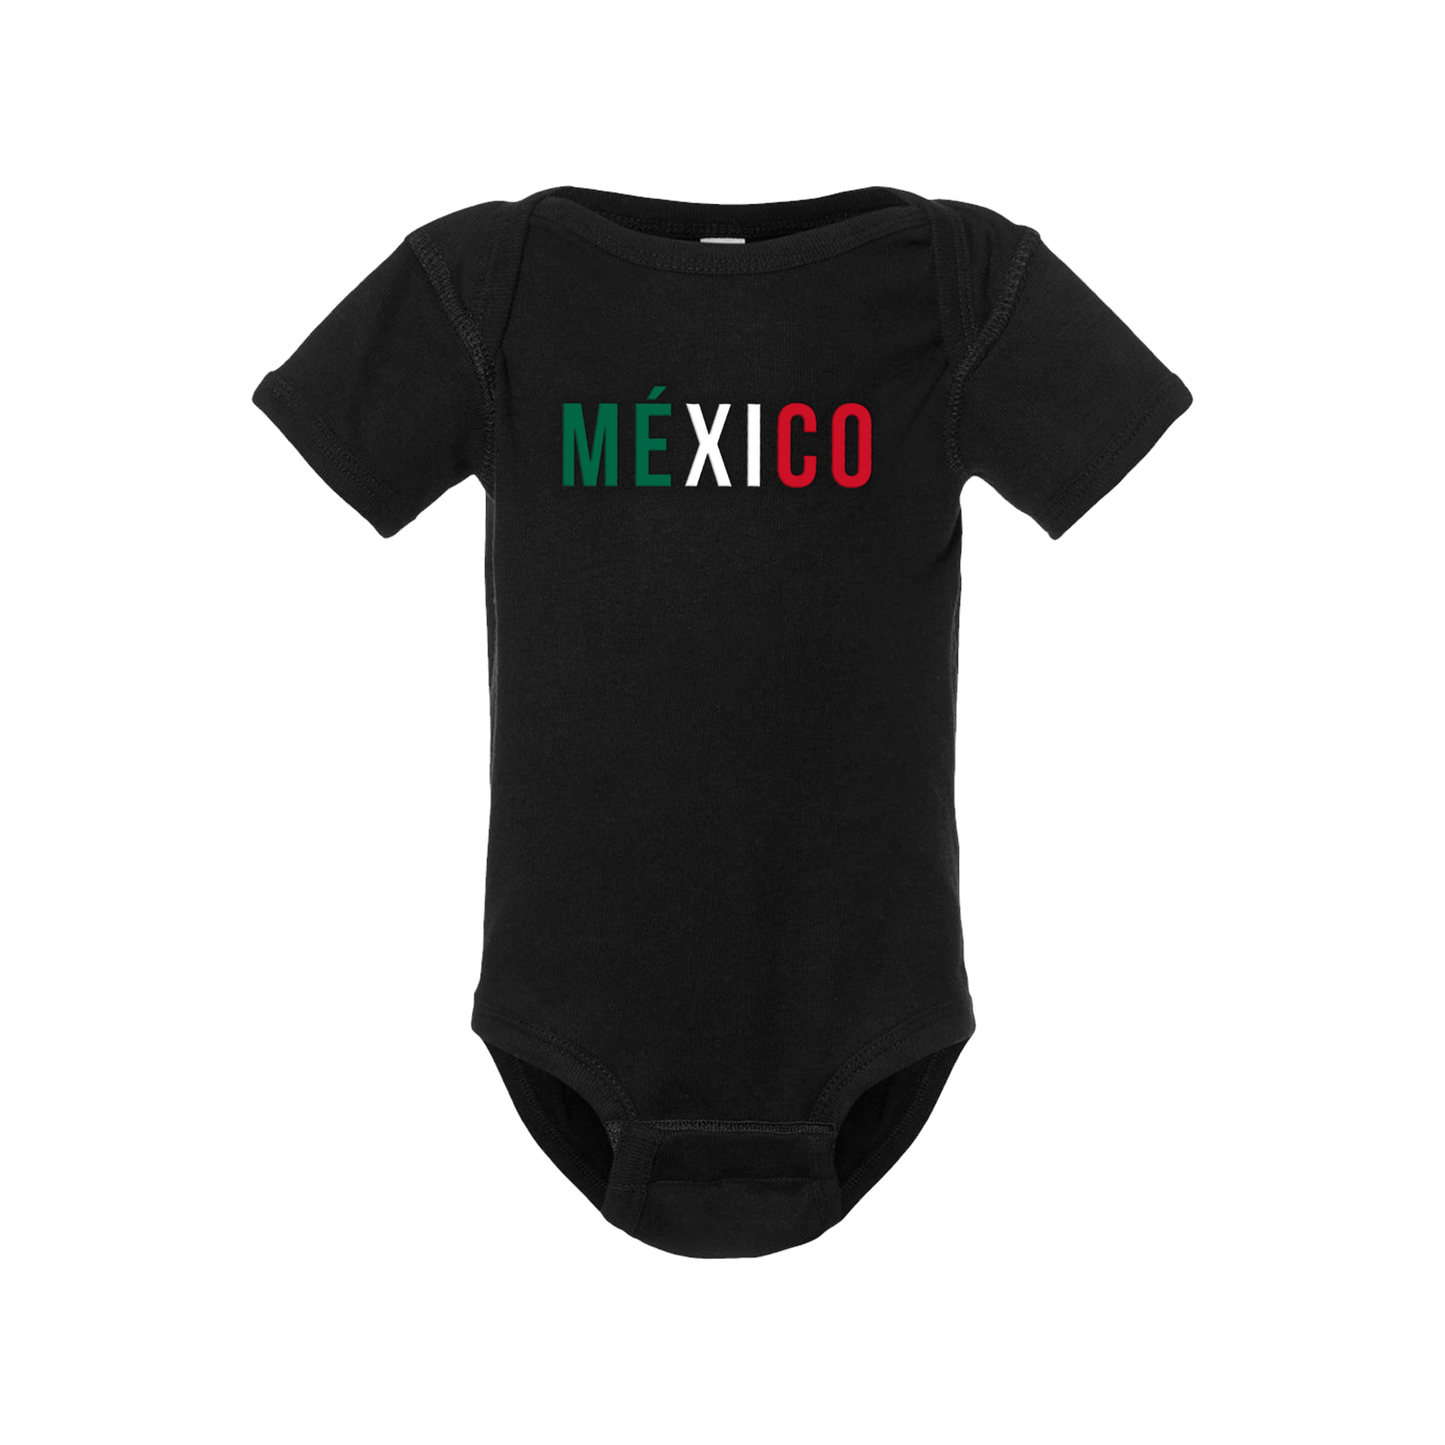 Mexico Short Sleeve Onesie - Babies & Toddlers